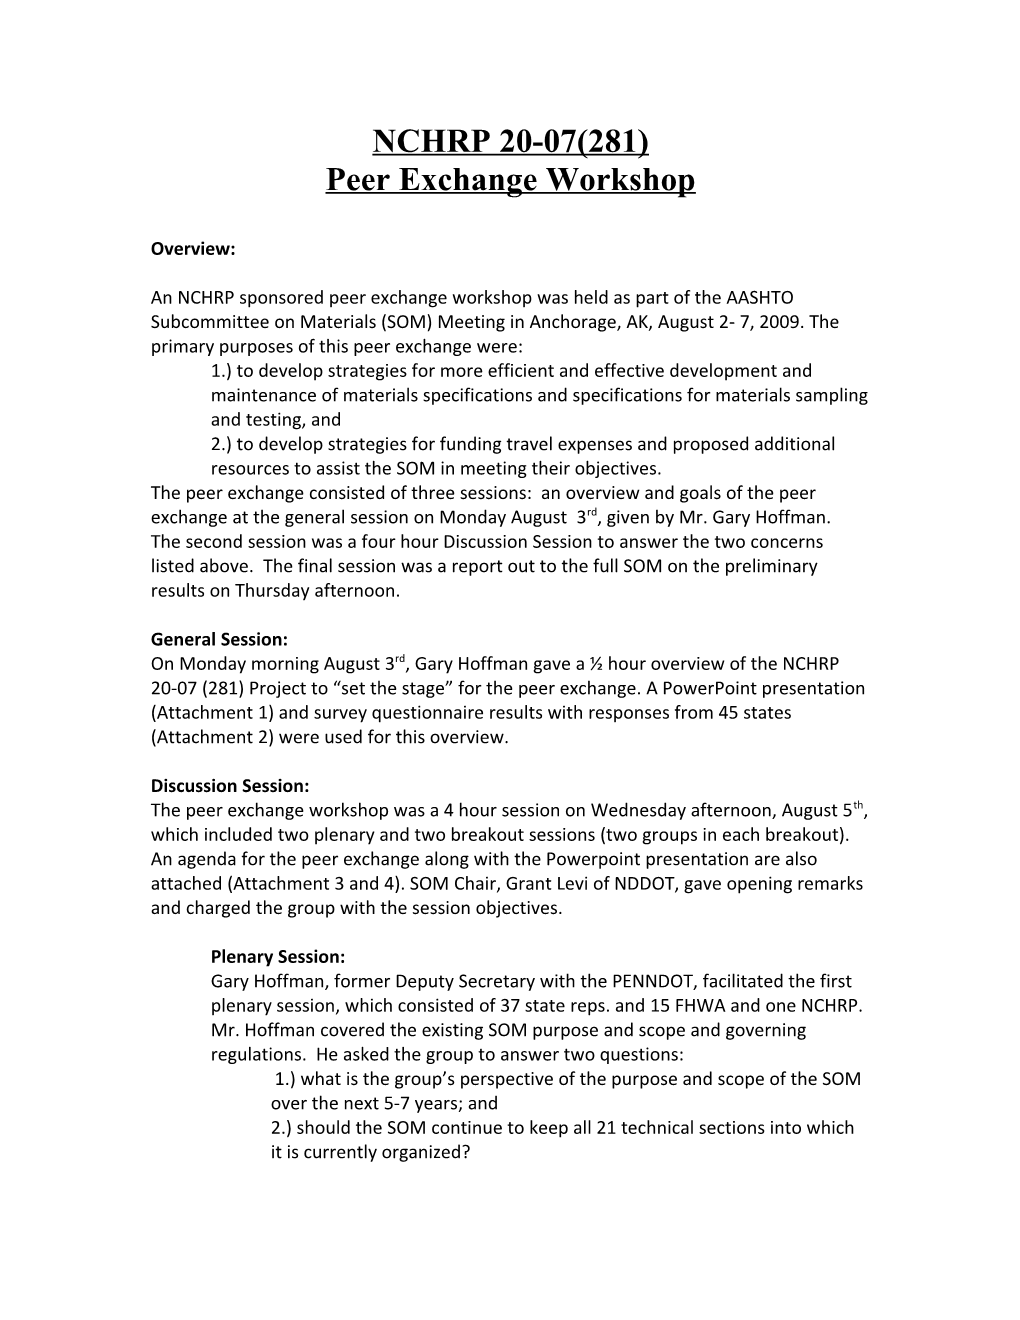 SOM Peer Exchange Document